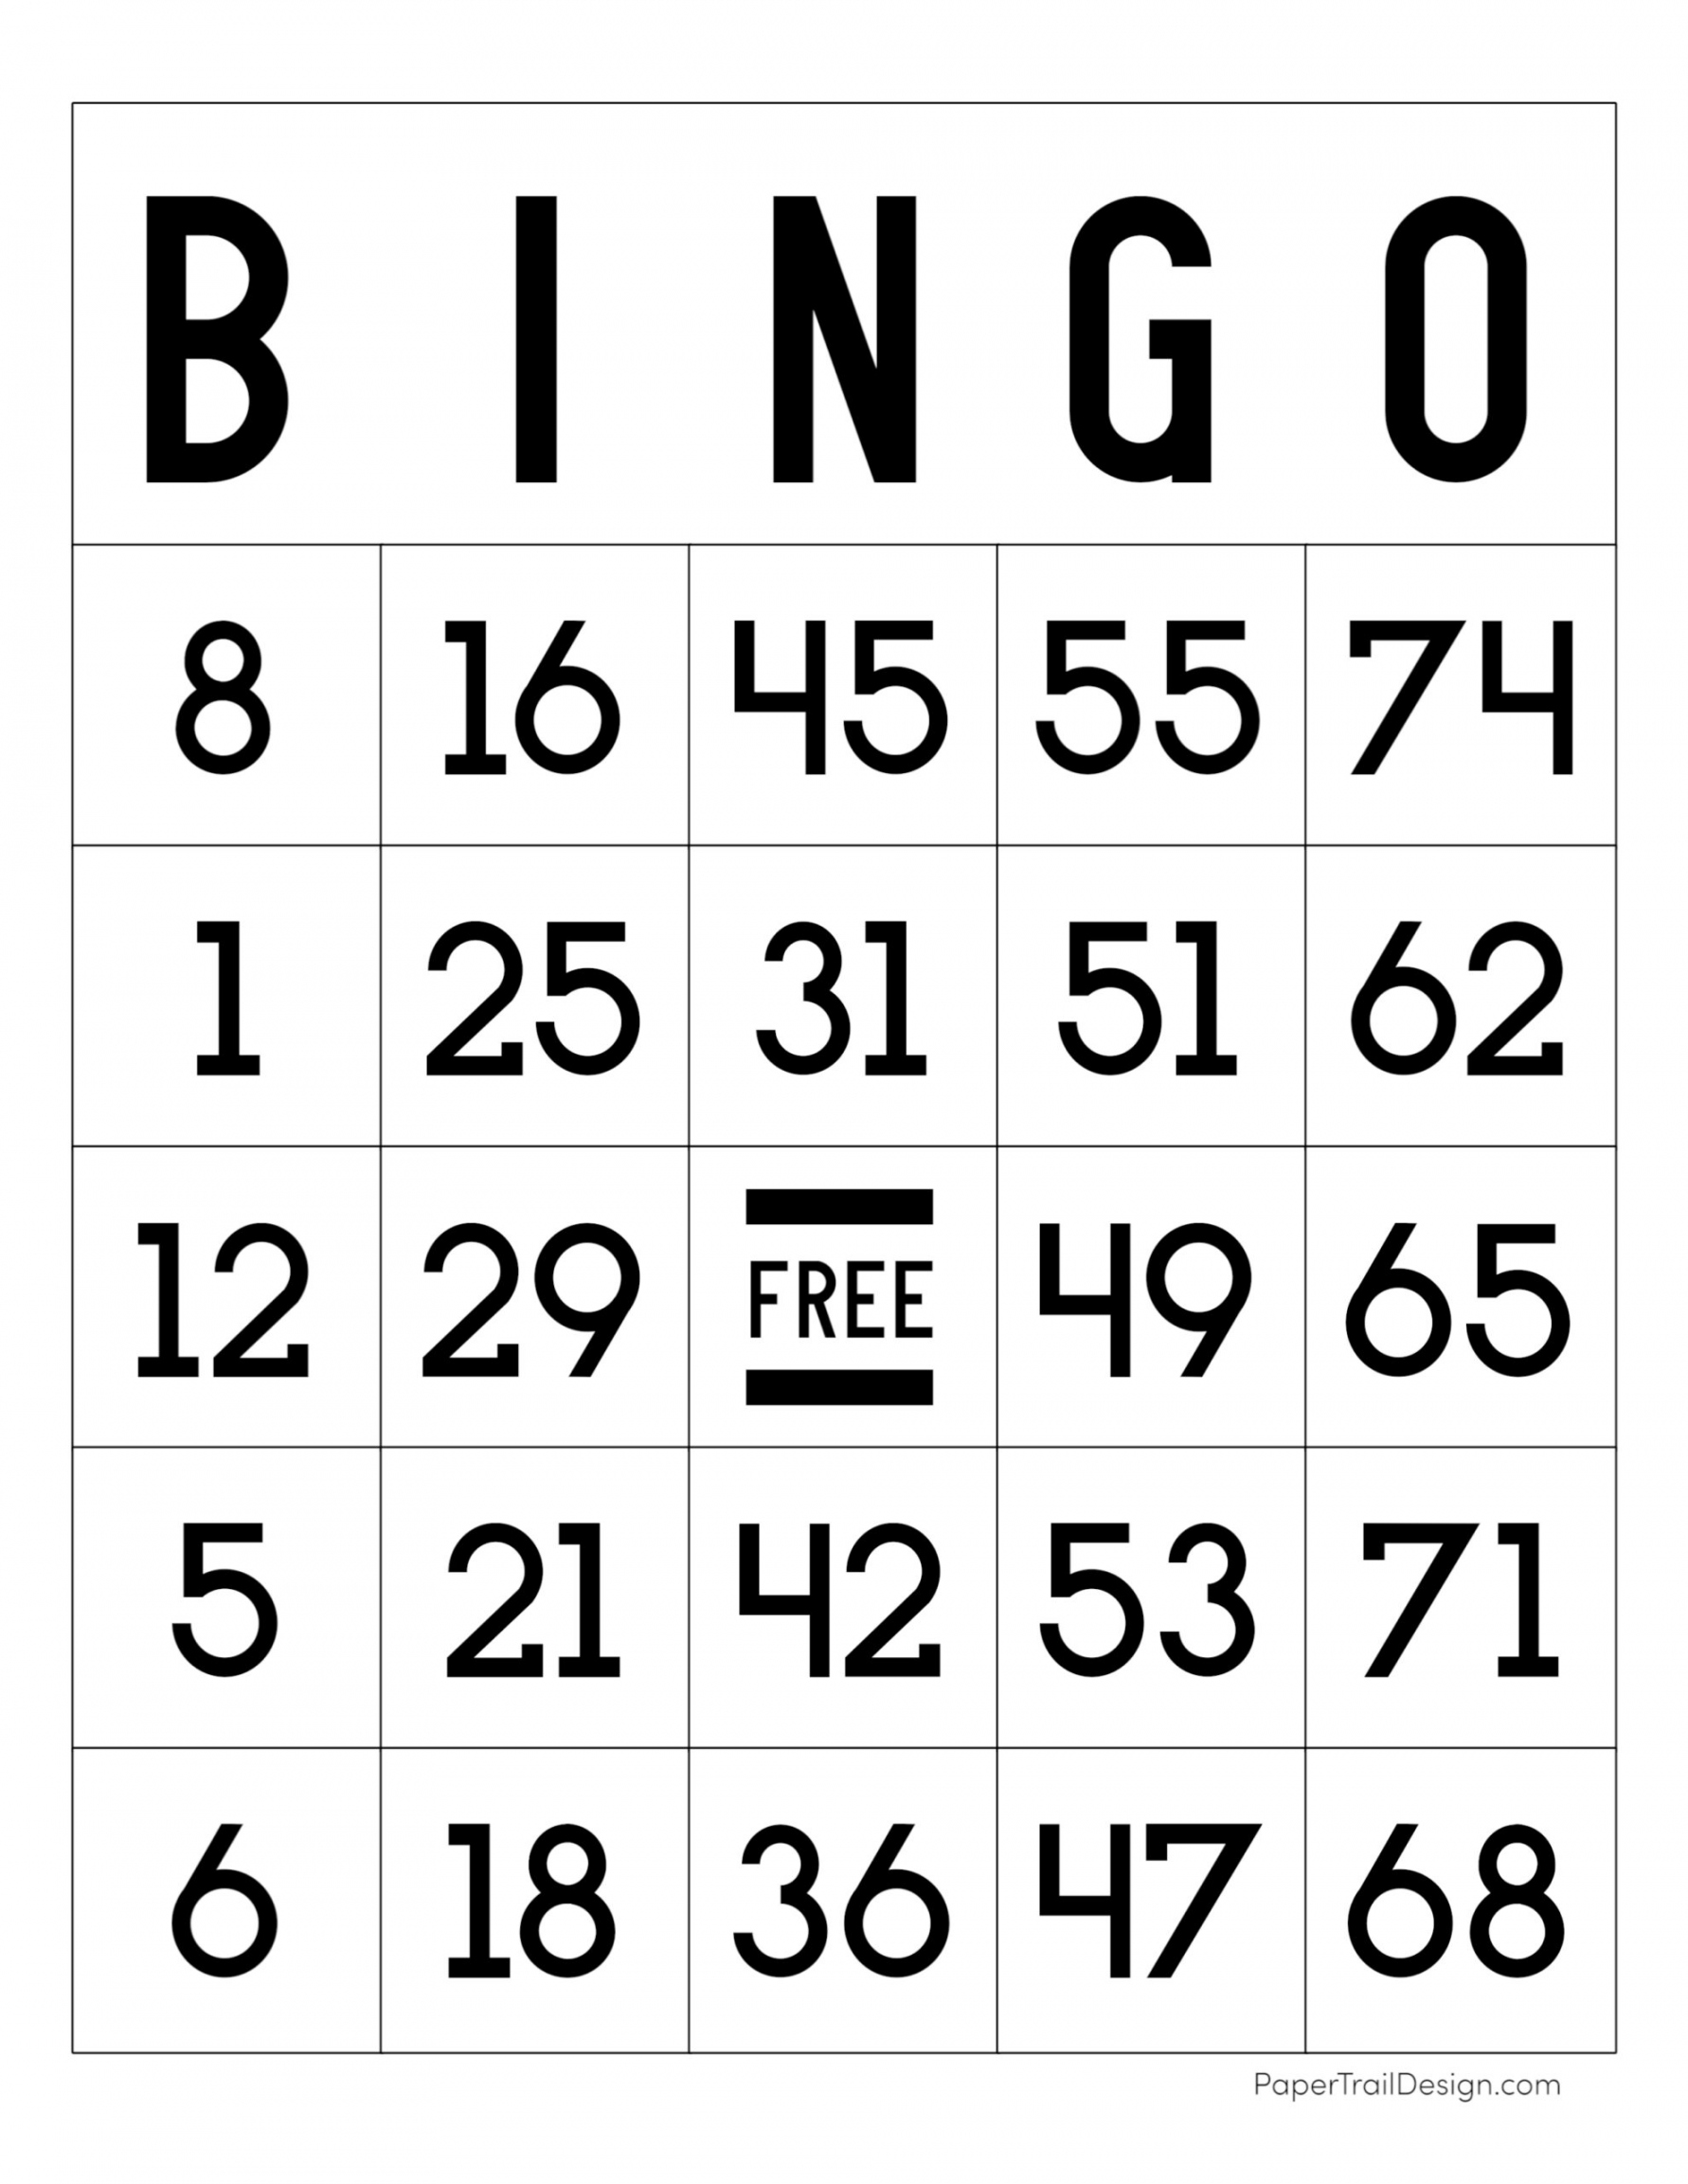 Free Printable Bingo Card Generator - Printable - Free Printable Bingo Cards - Paper Trail Design